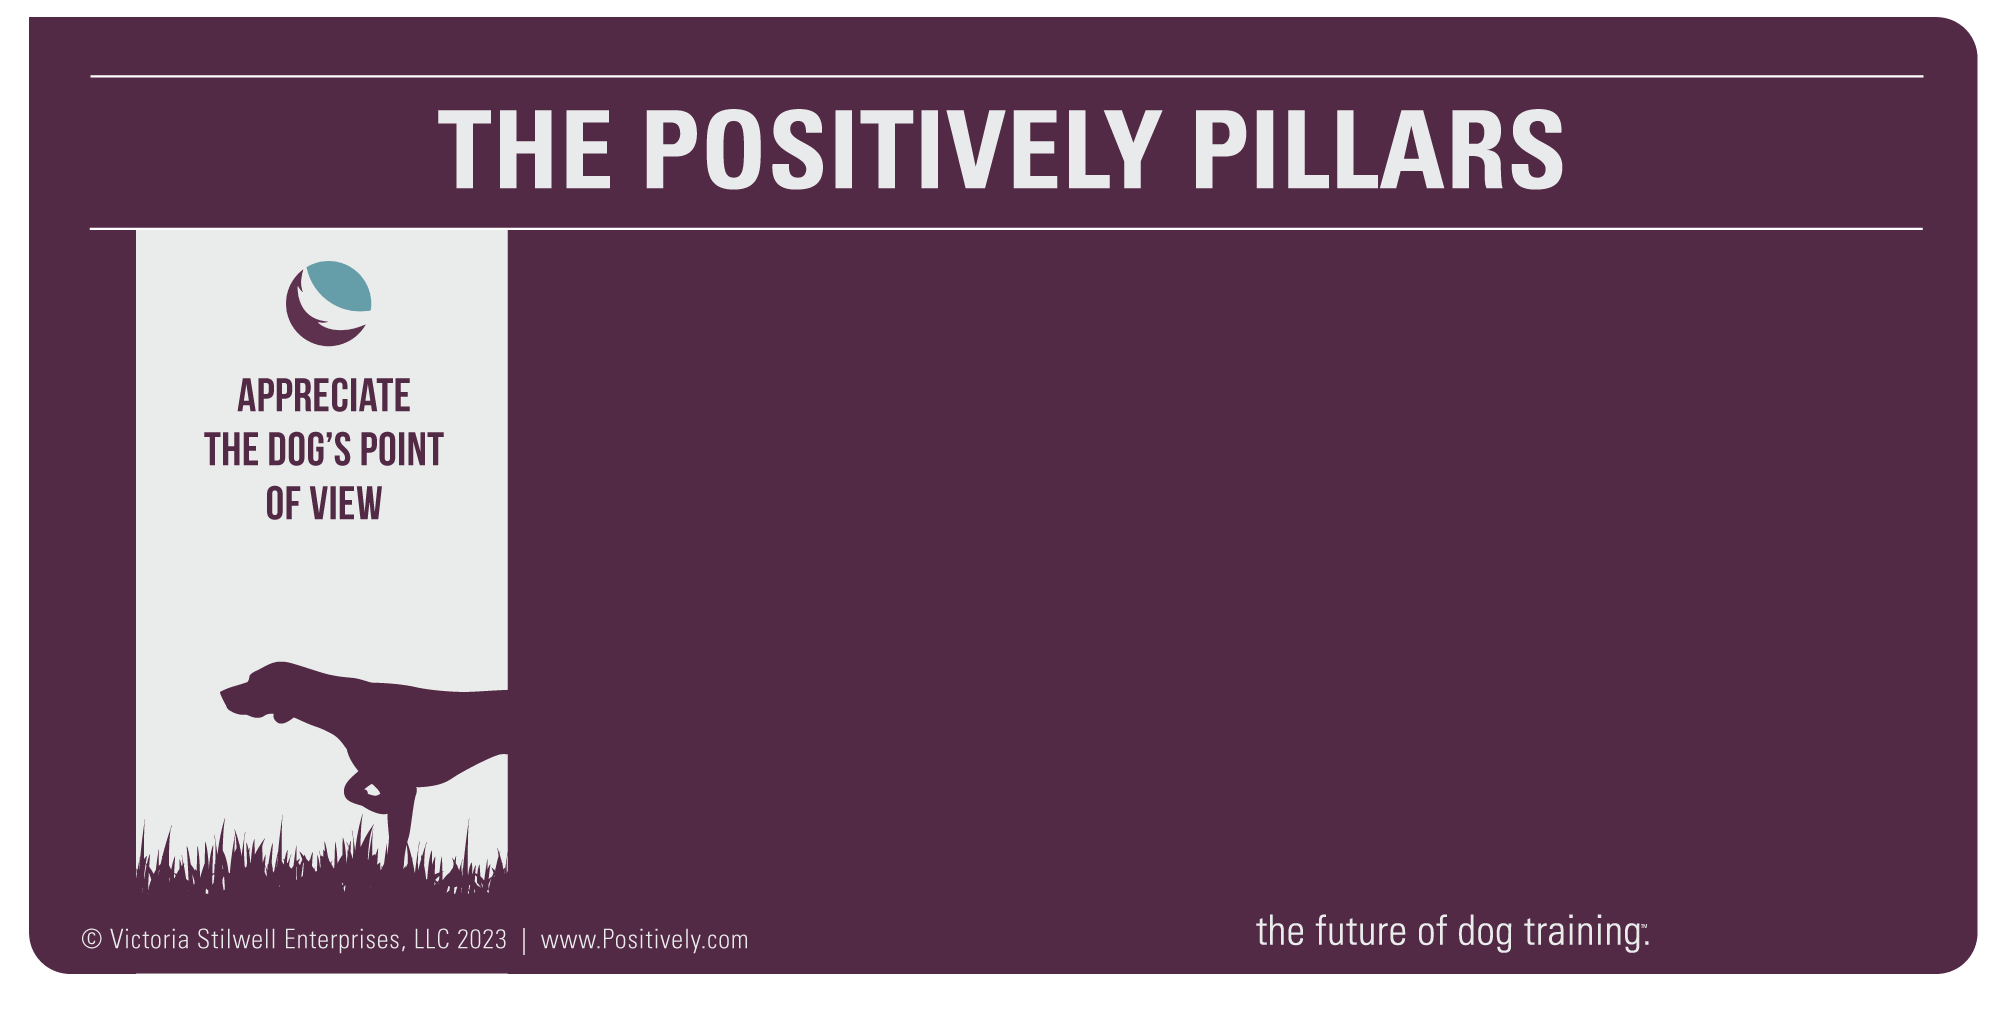 Positively Pillar #1